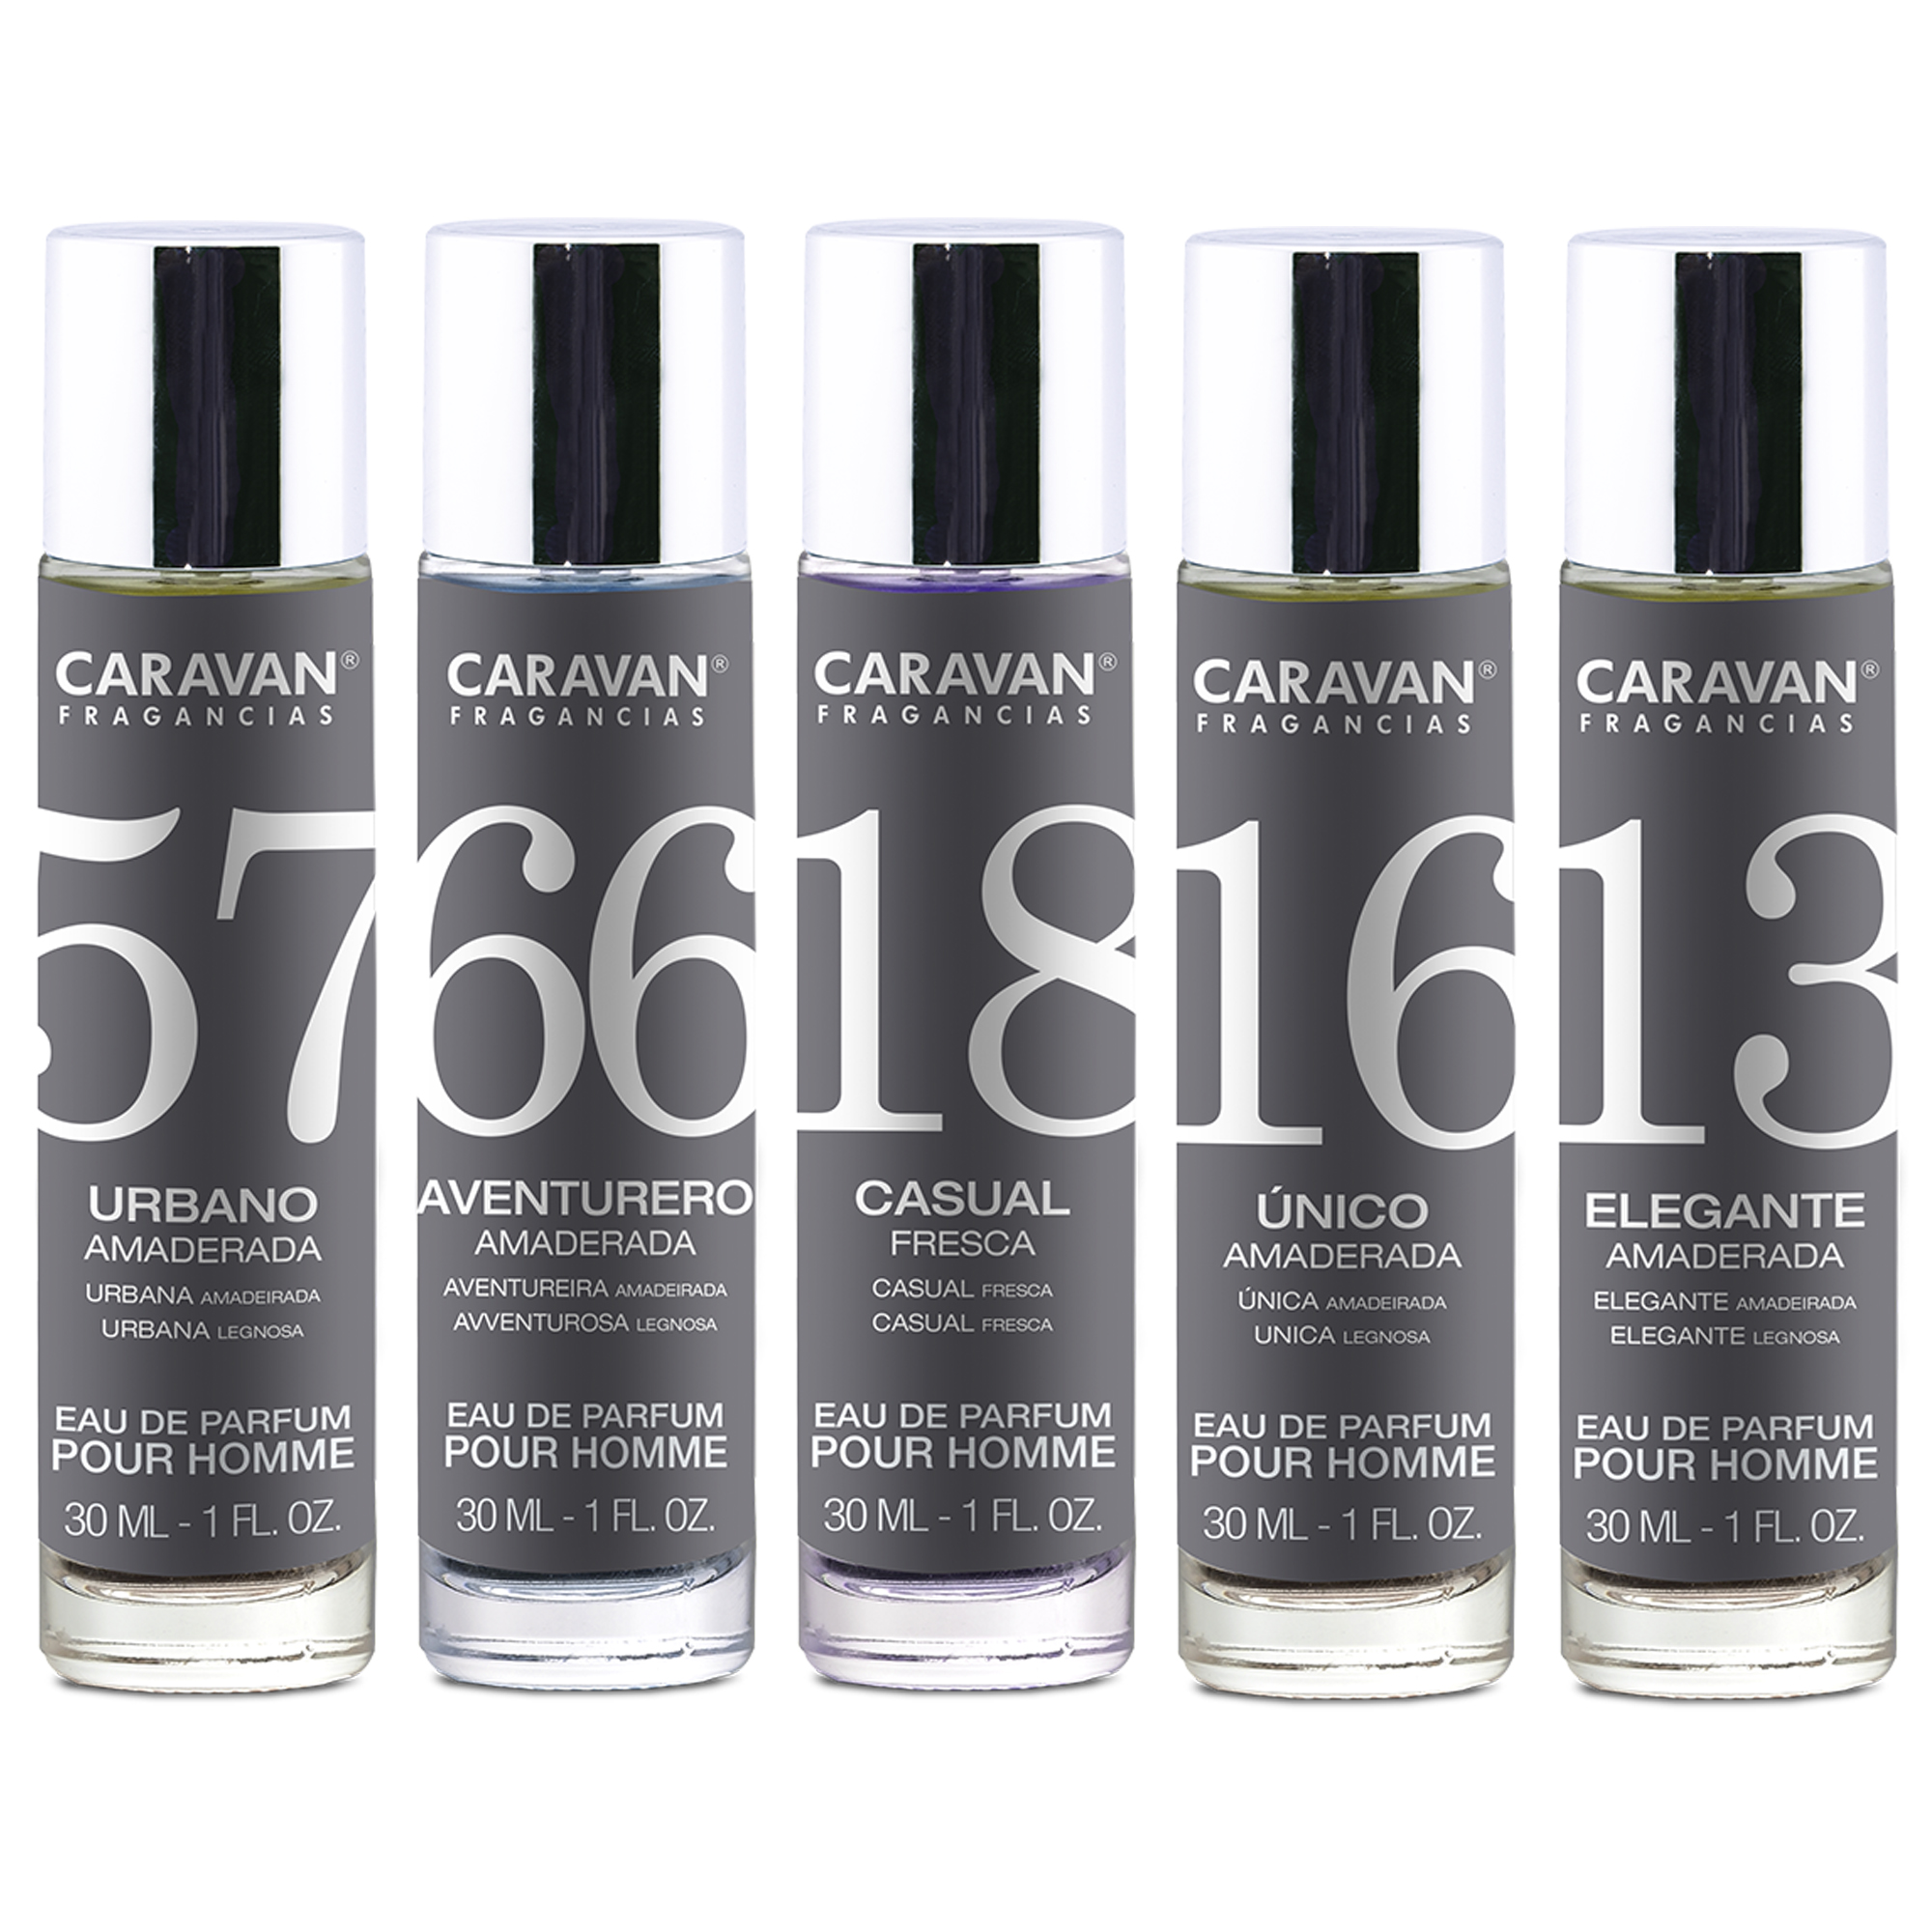 Caravan Fragancias - 5X Caravan perfumes SURTIDOS de hombre Nº13 + Nº16 + Nº18 + Nº56 + Nº57.